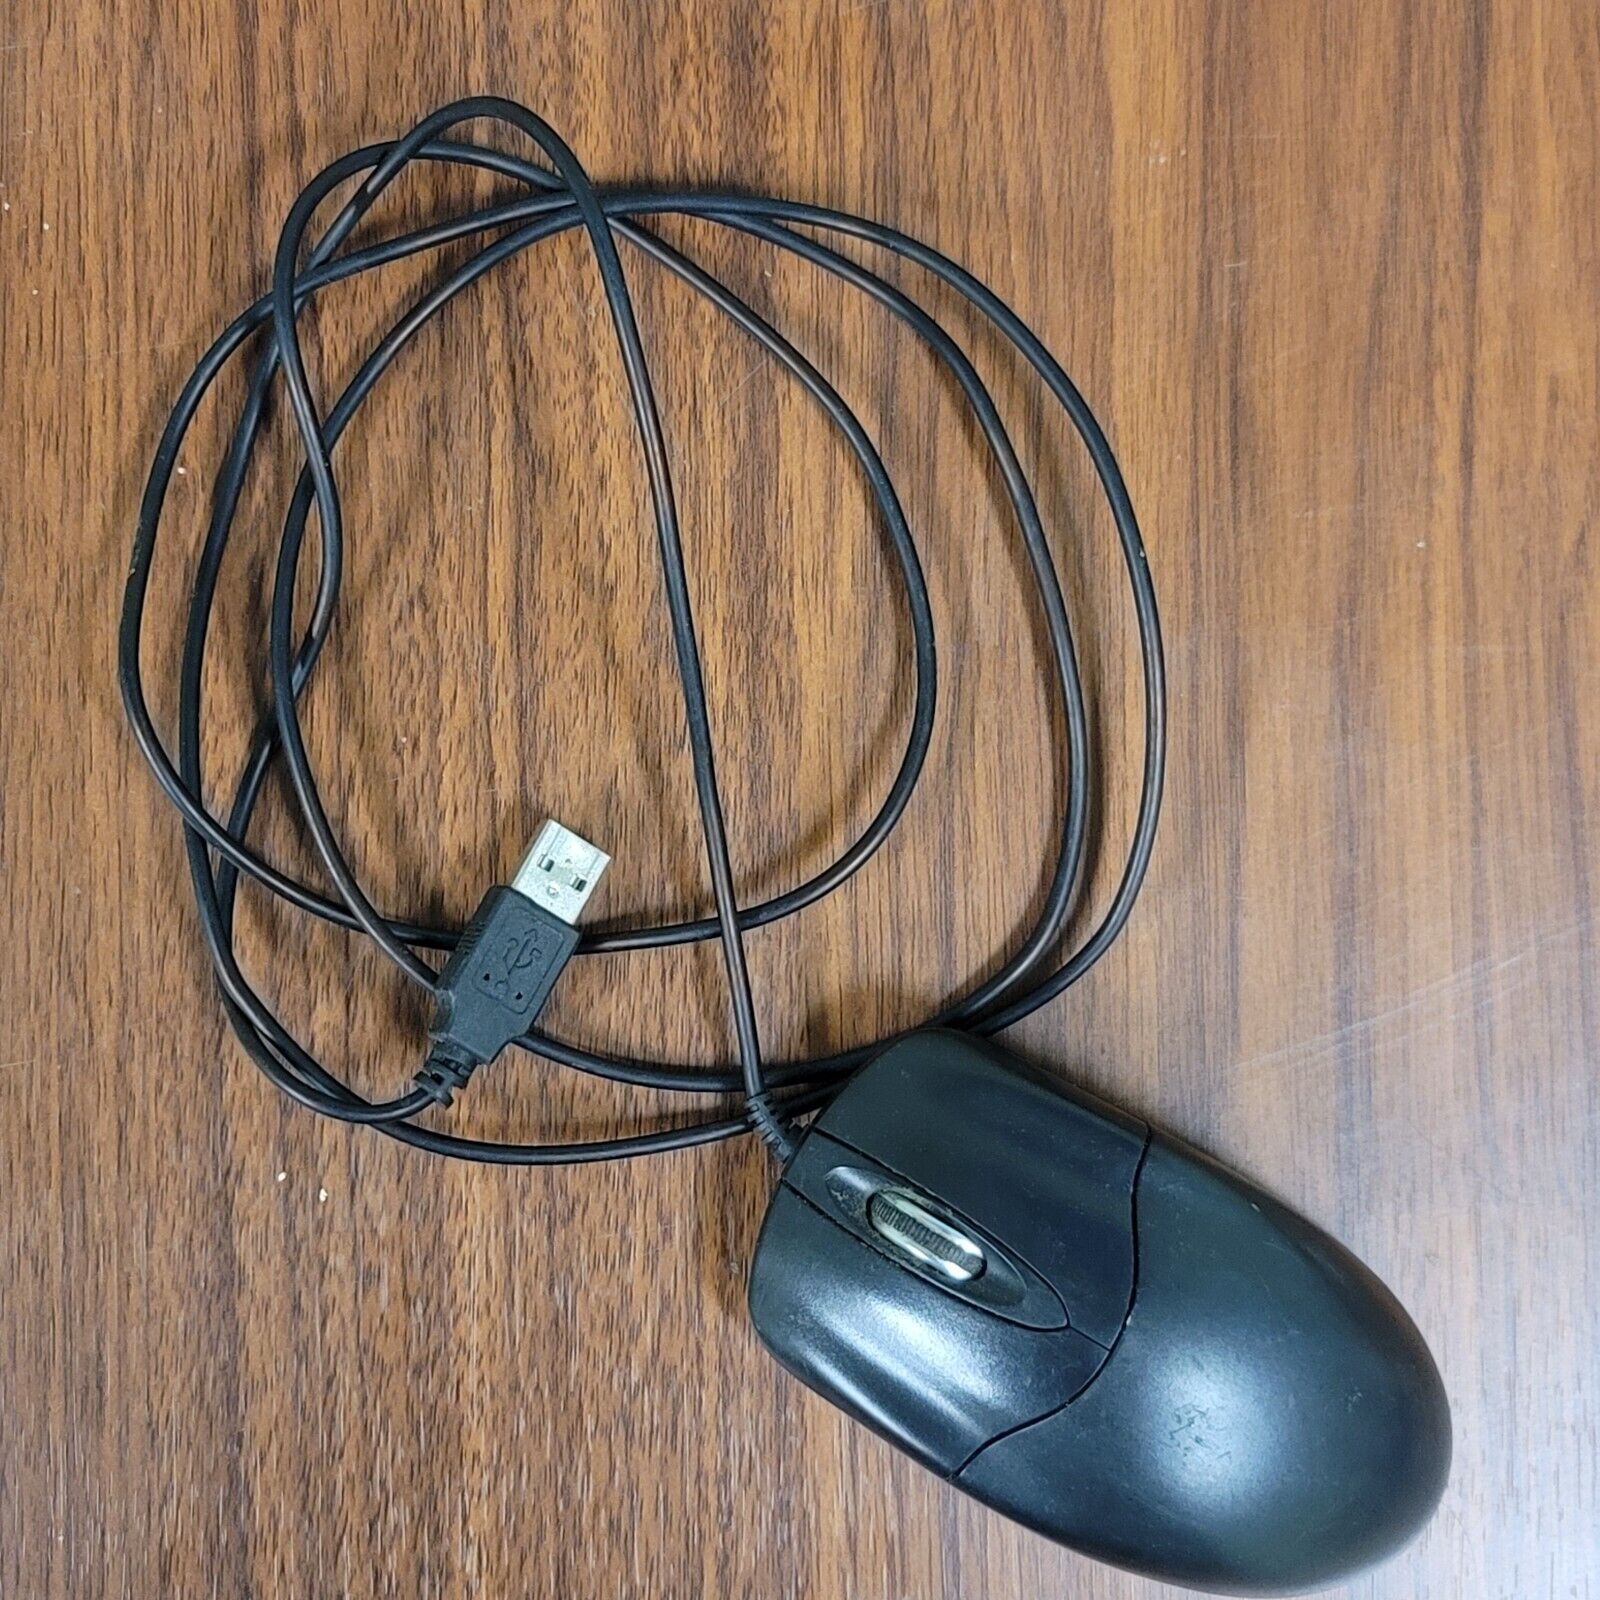 Adesso 3 Button Desktop USB Optical Scroll Mouse